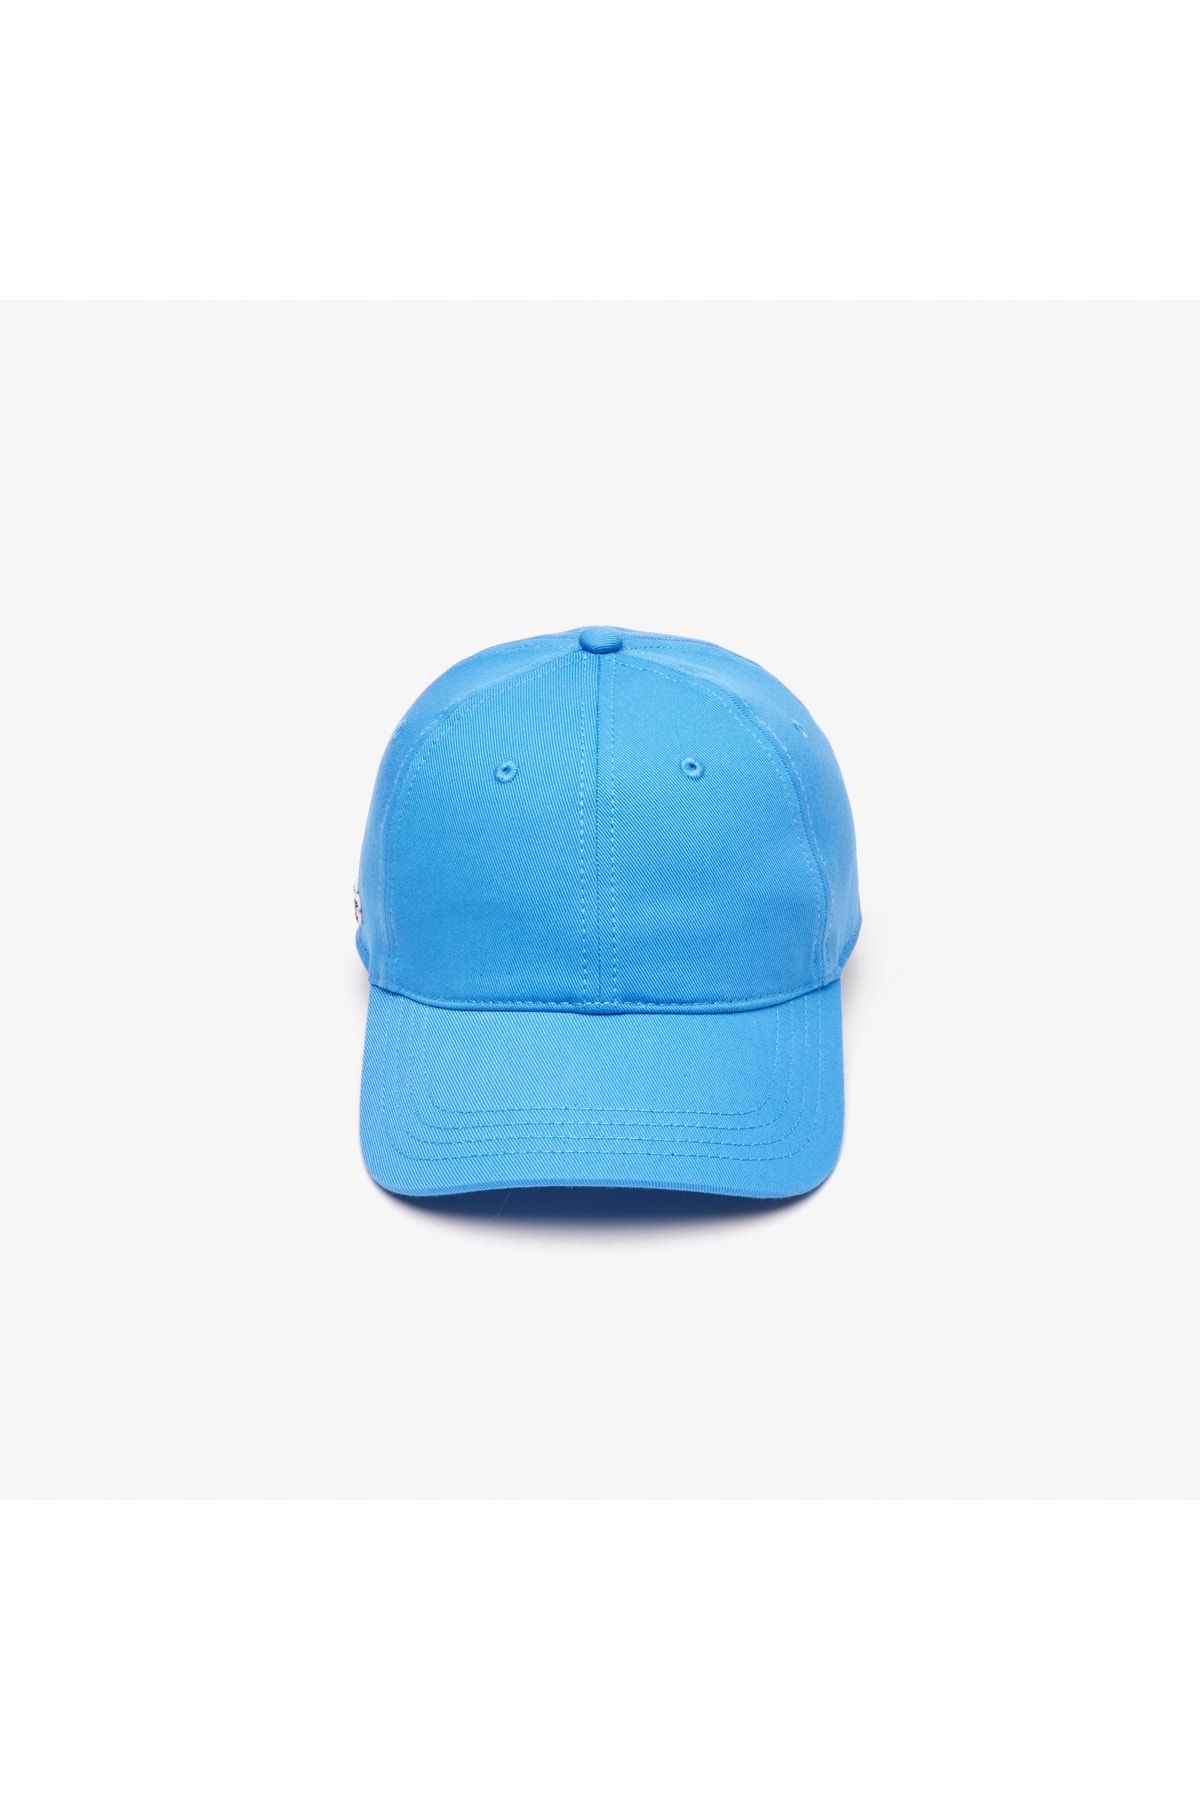 Lacoste کلاه آبی یونیکس